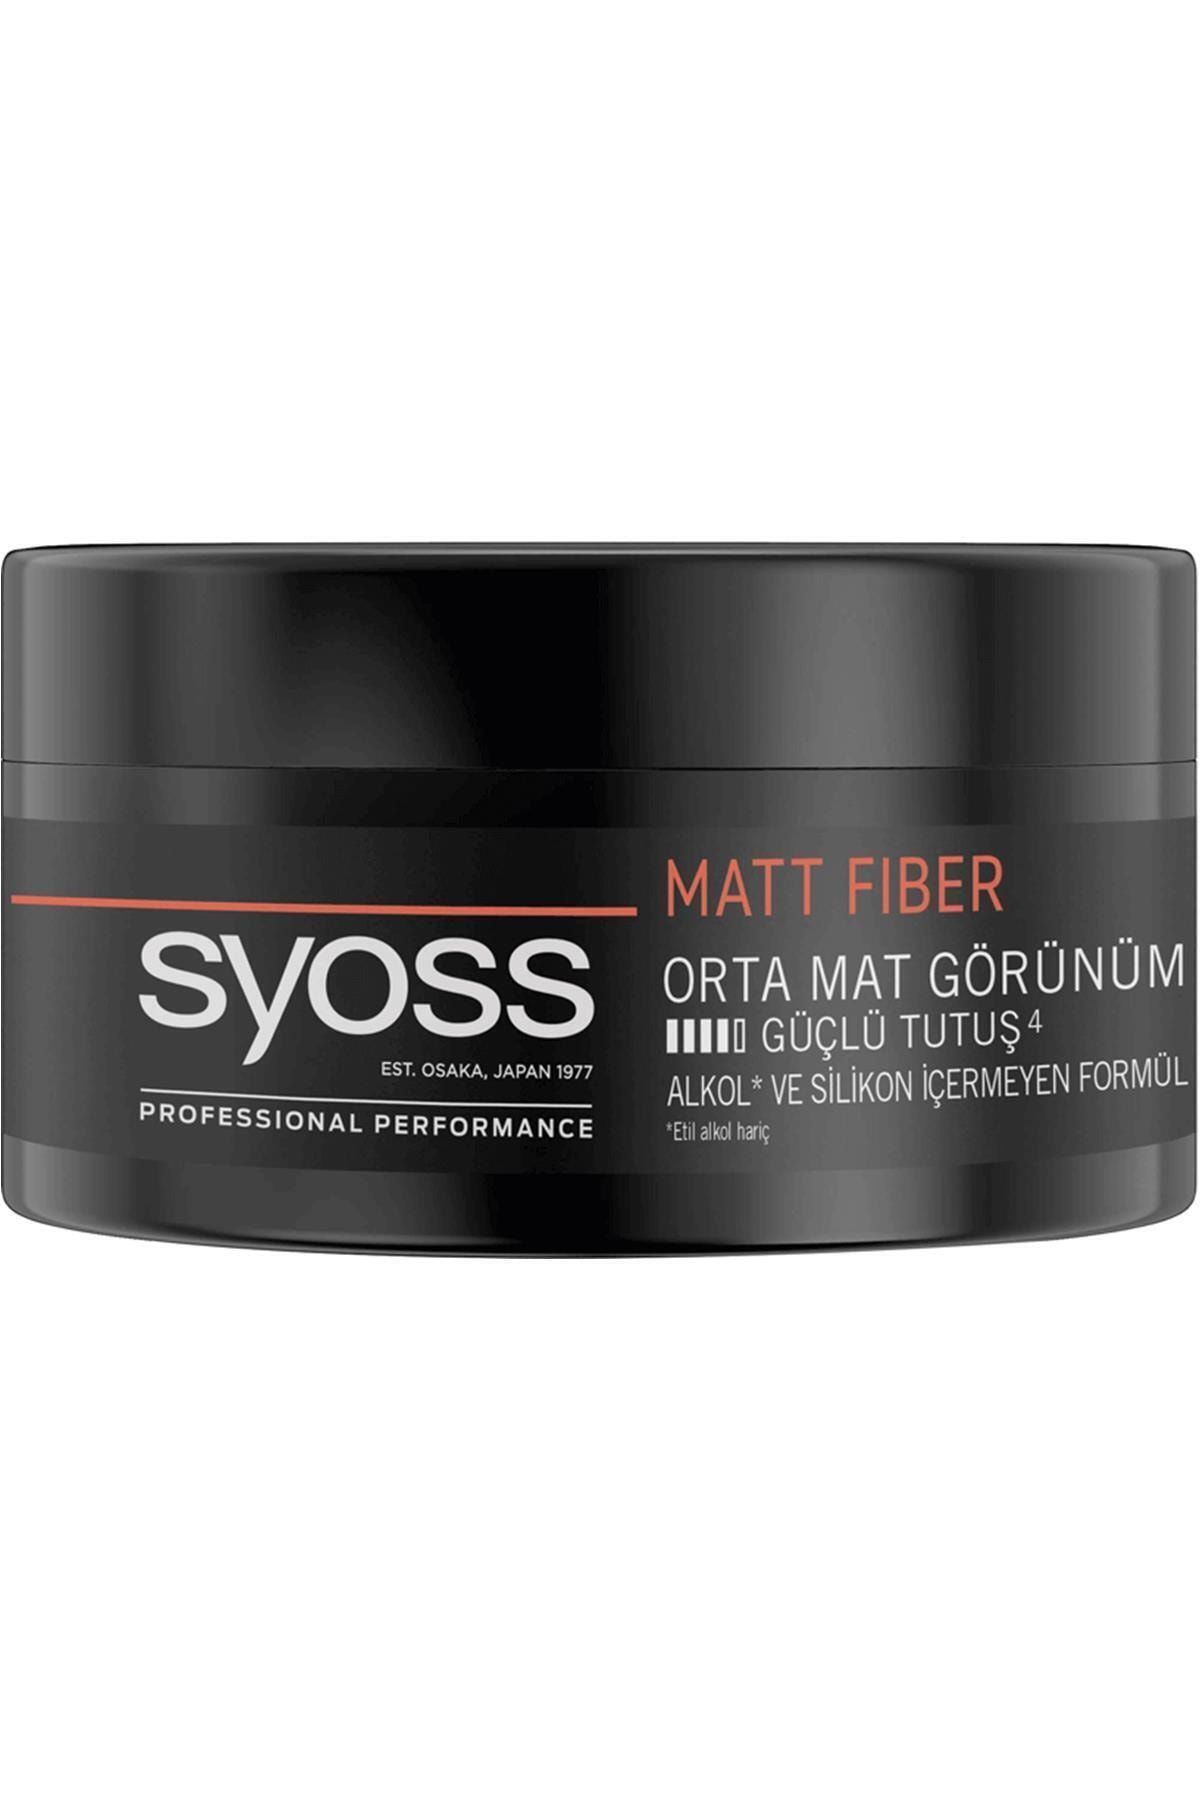 Syoss Matt Fiber Wax 100 Ml Kategori: Saç Şekillendirici Krem Ve Wax